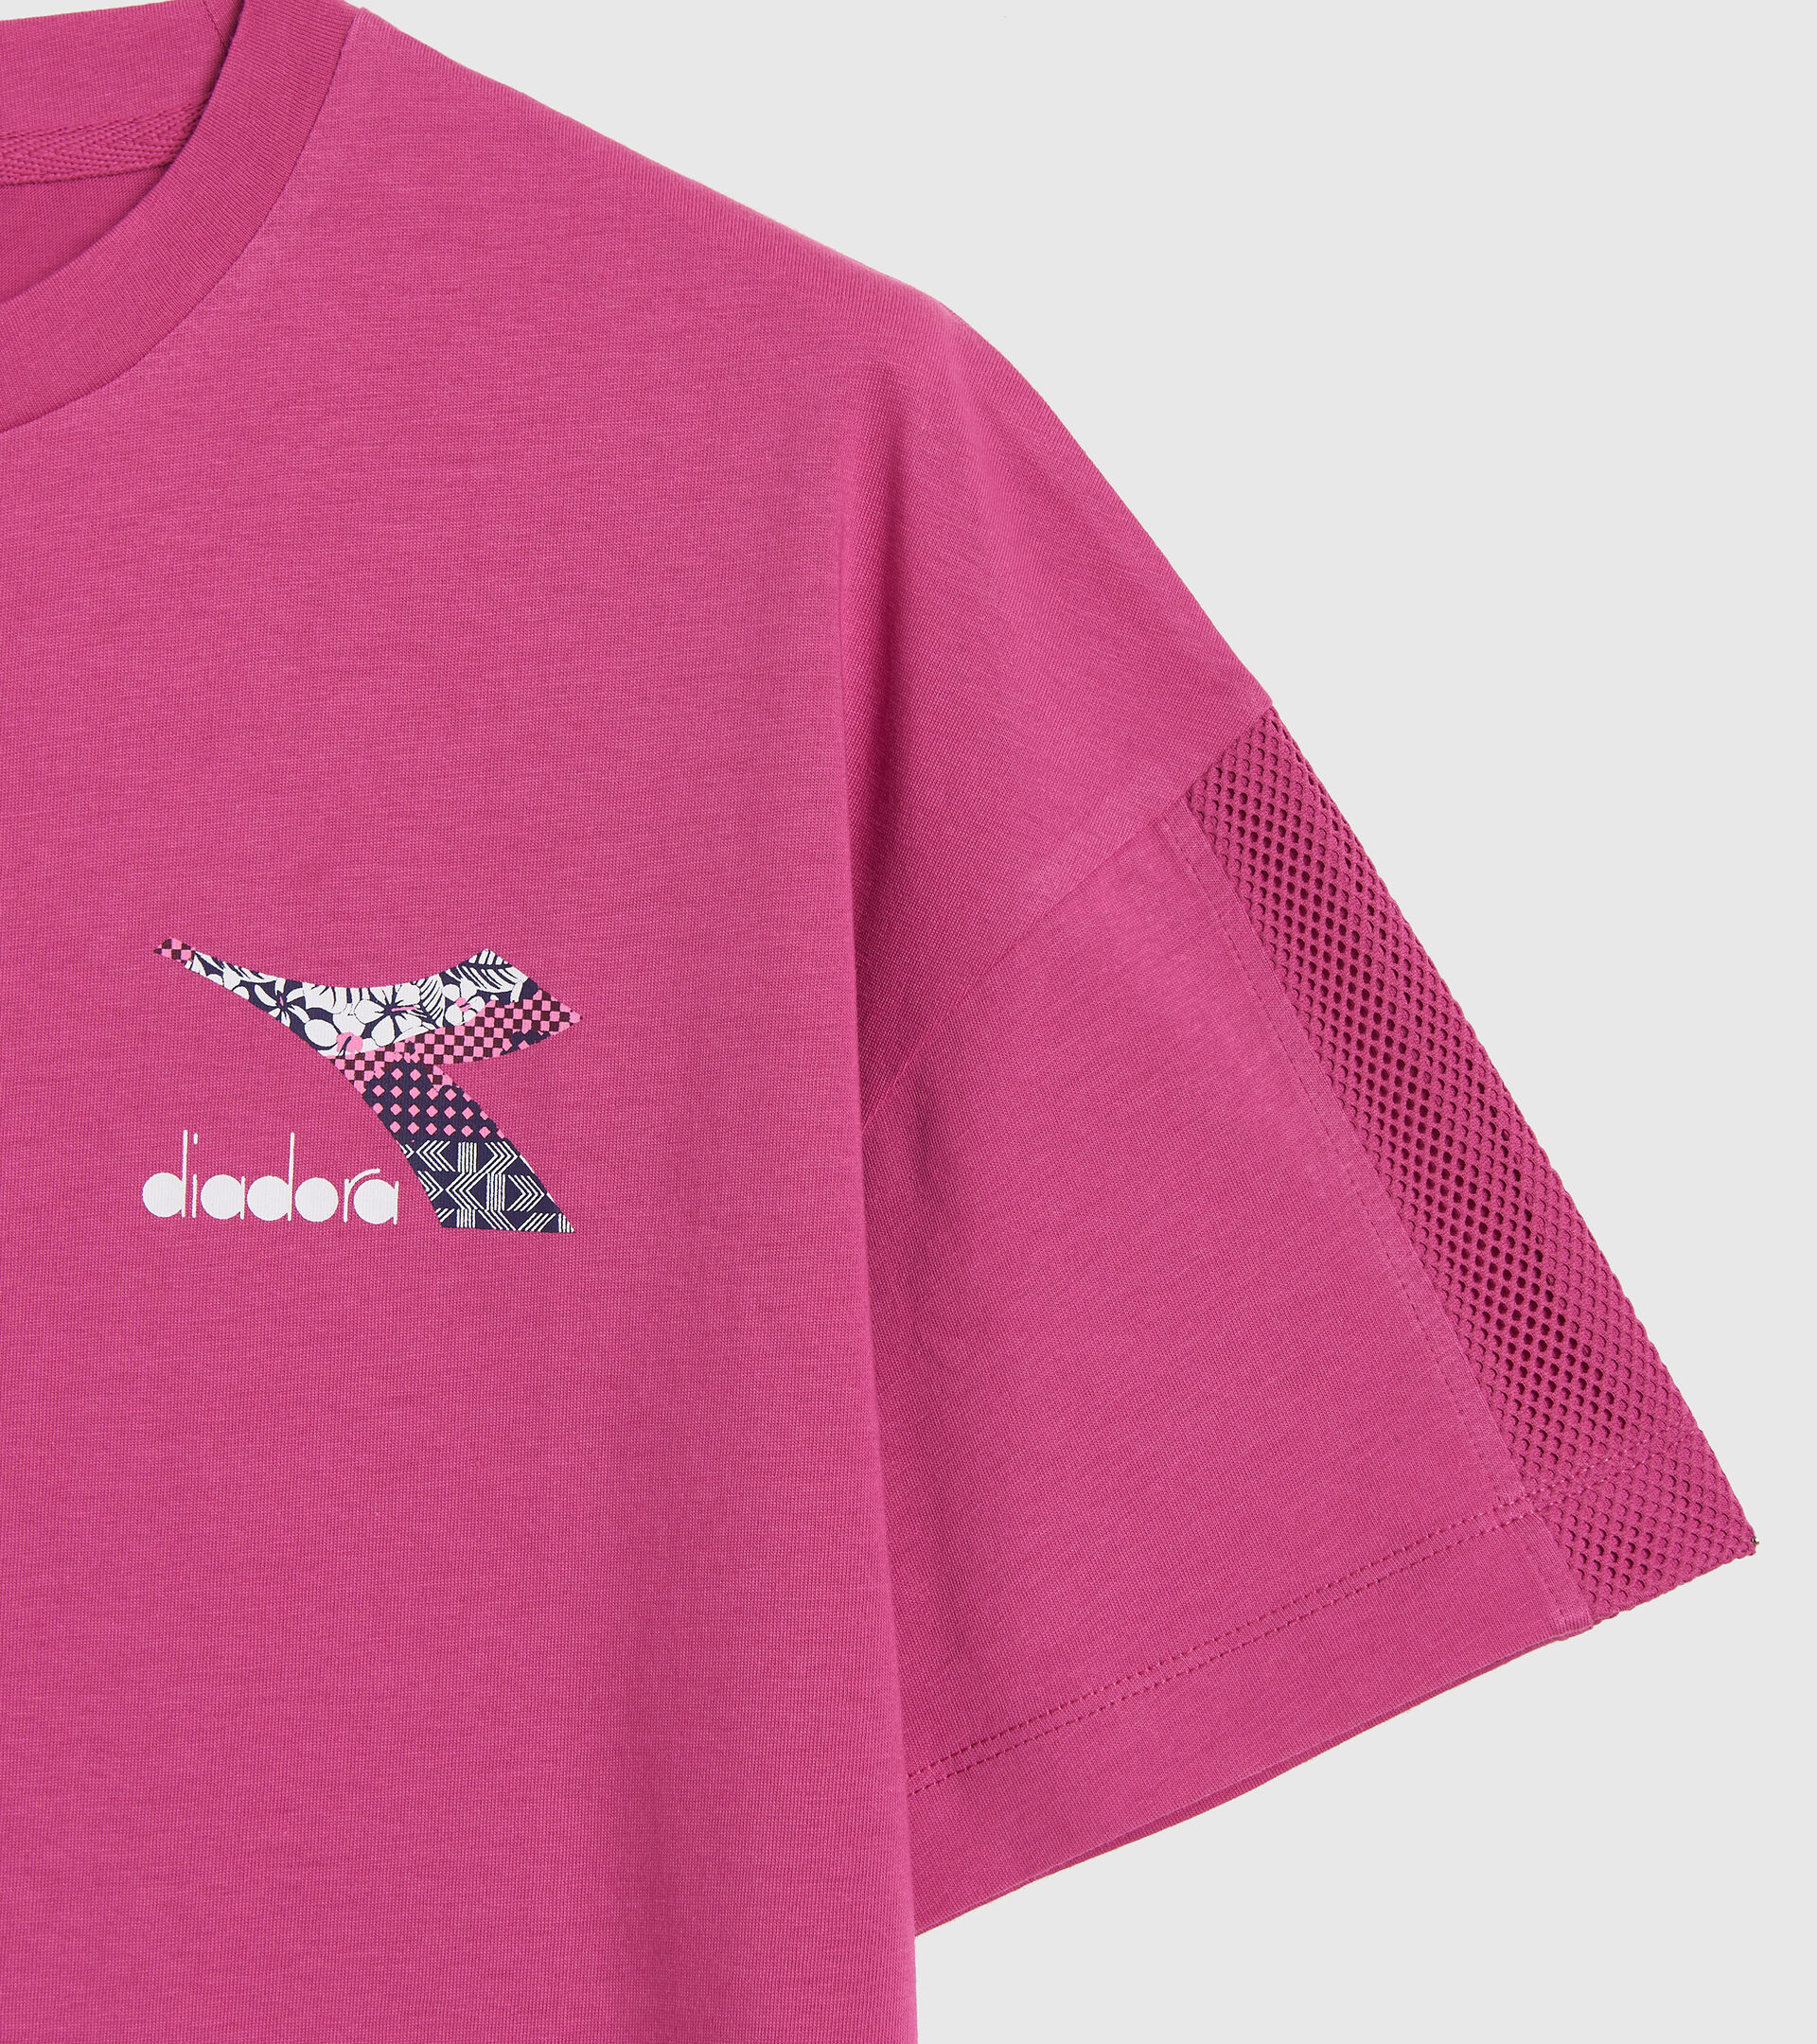 Camiseta deportiva de algodón - Mujer L.T-SHIRT SS FLOSS ROSA IBIS - Diadora